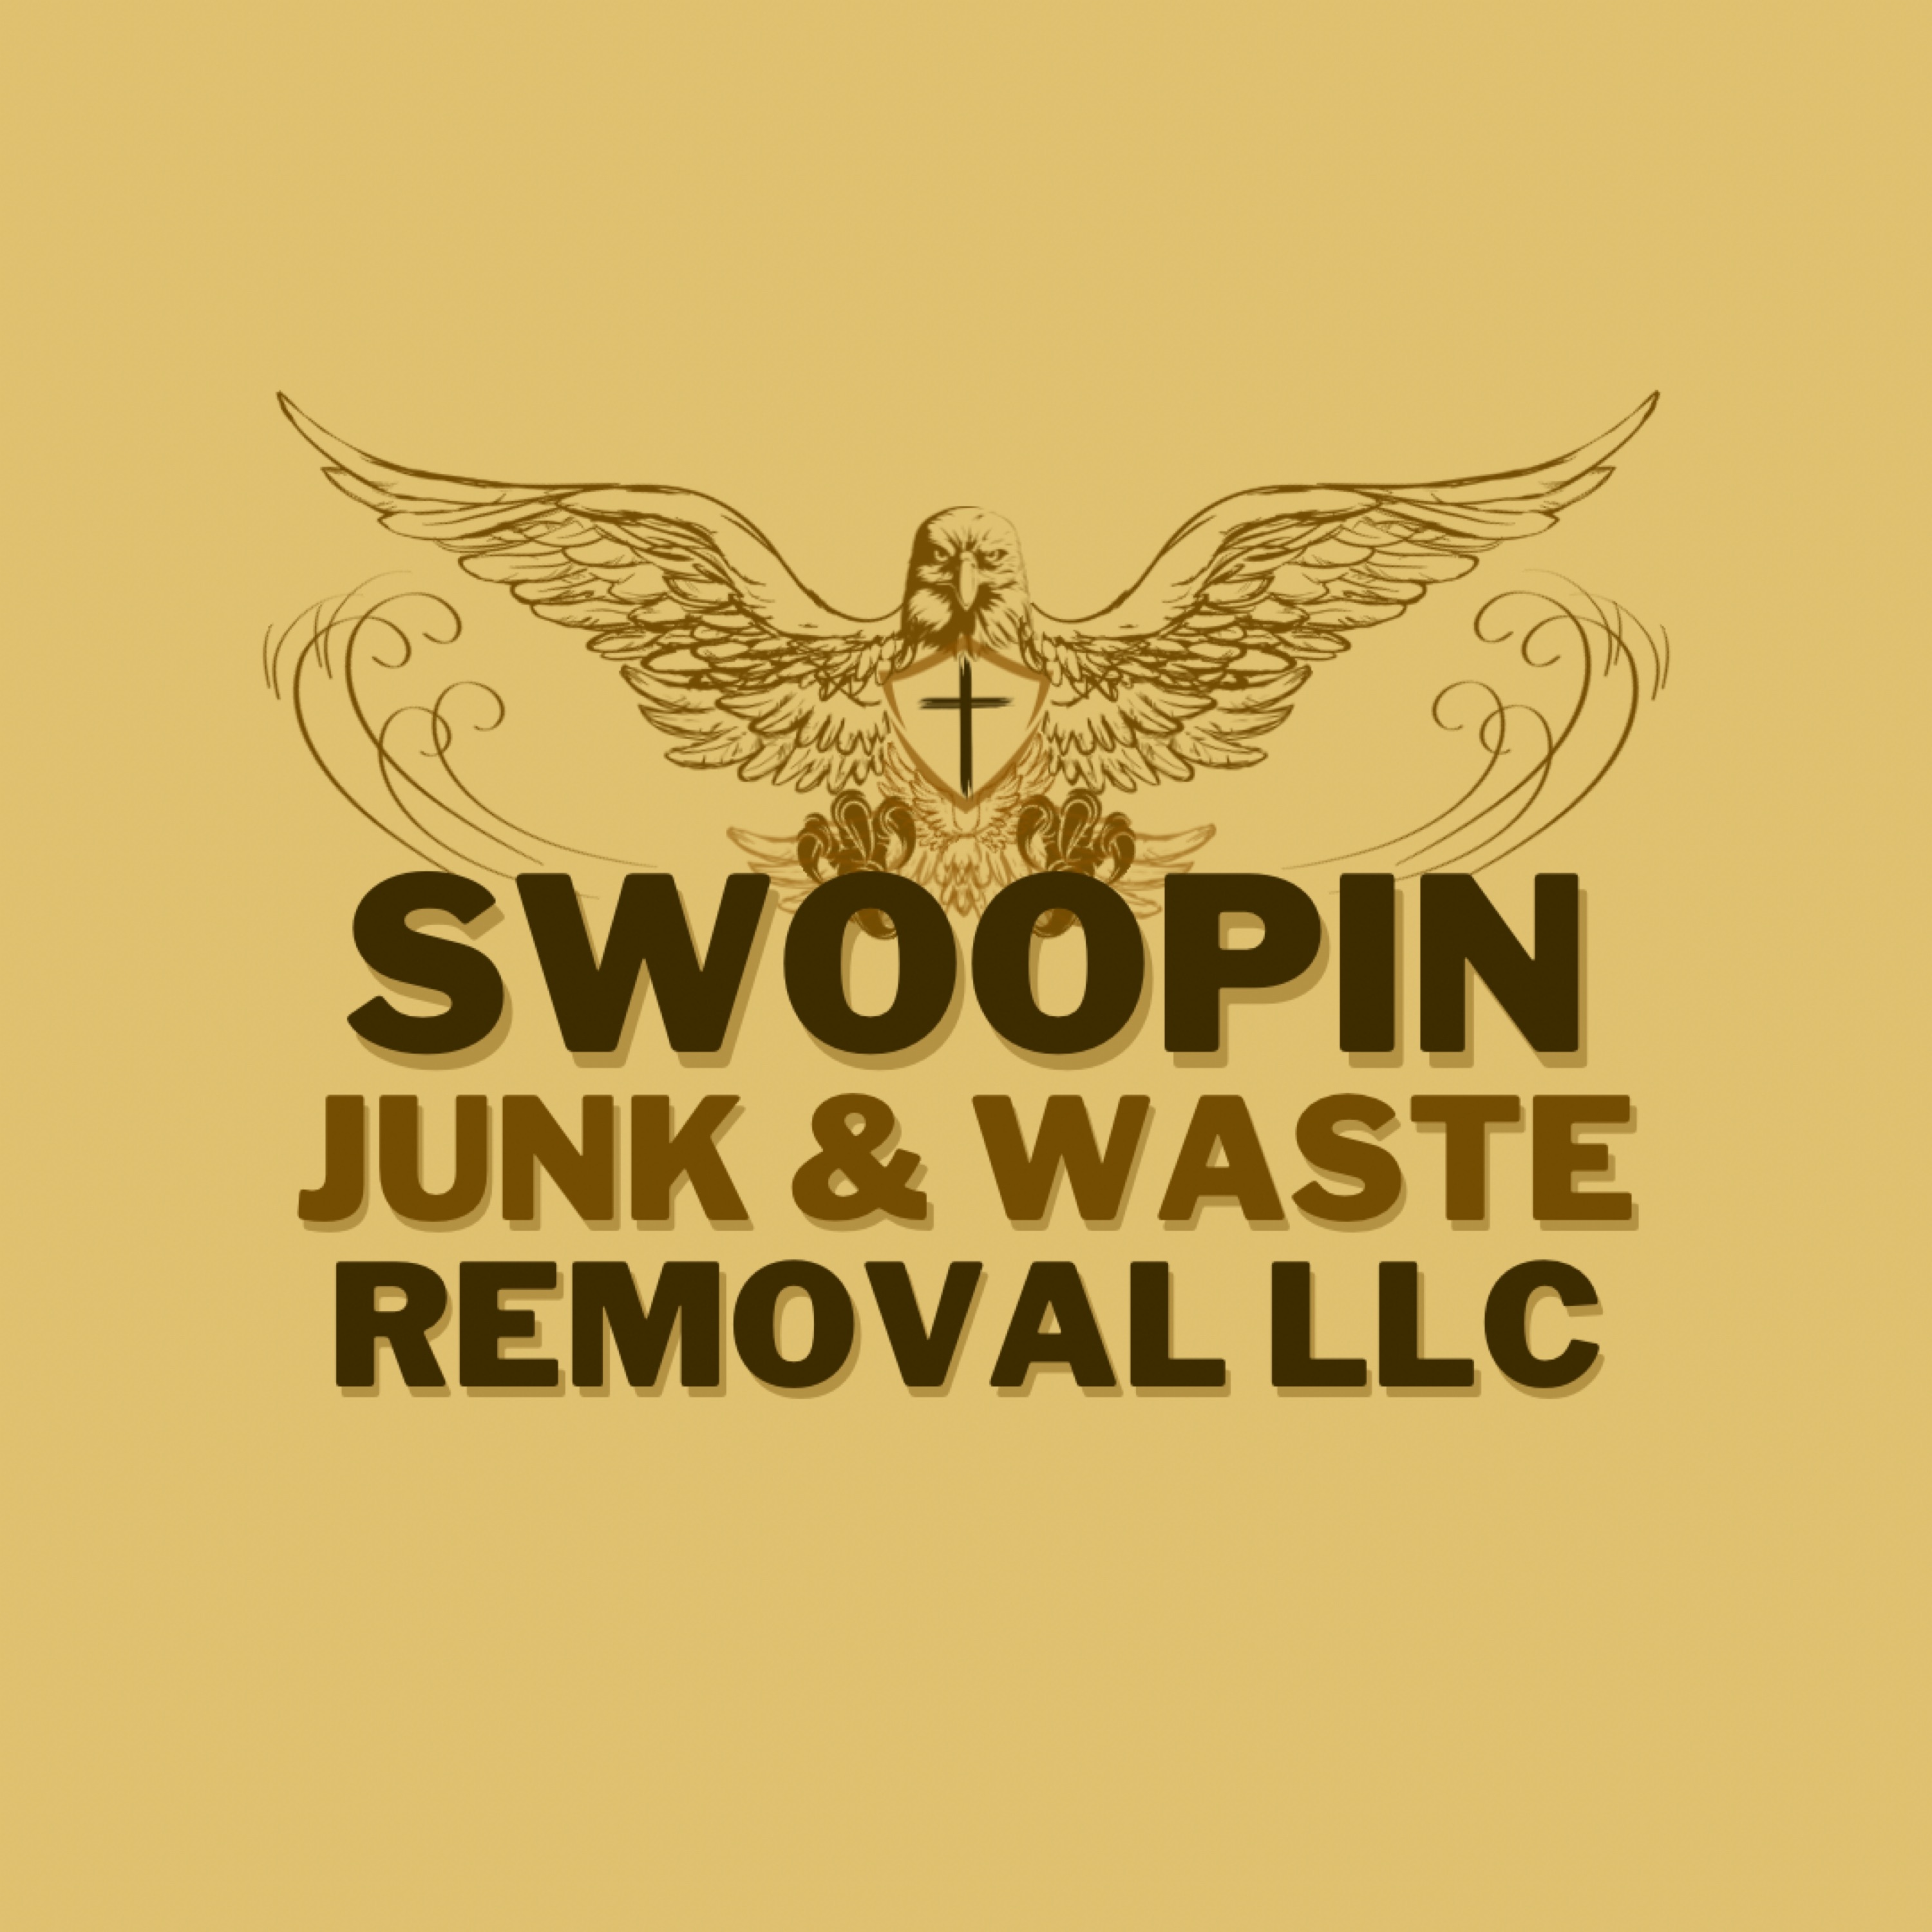 SWOOPIN' JUNK & WASTE REMOVAL LLC Logo